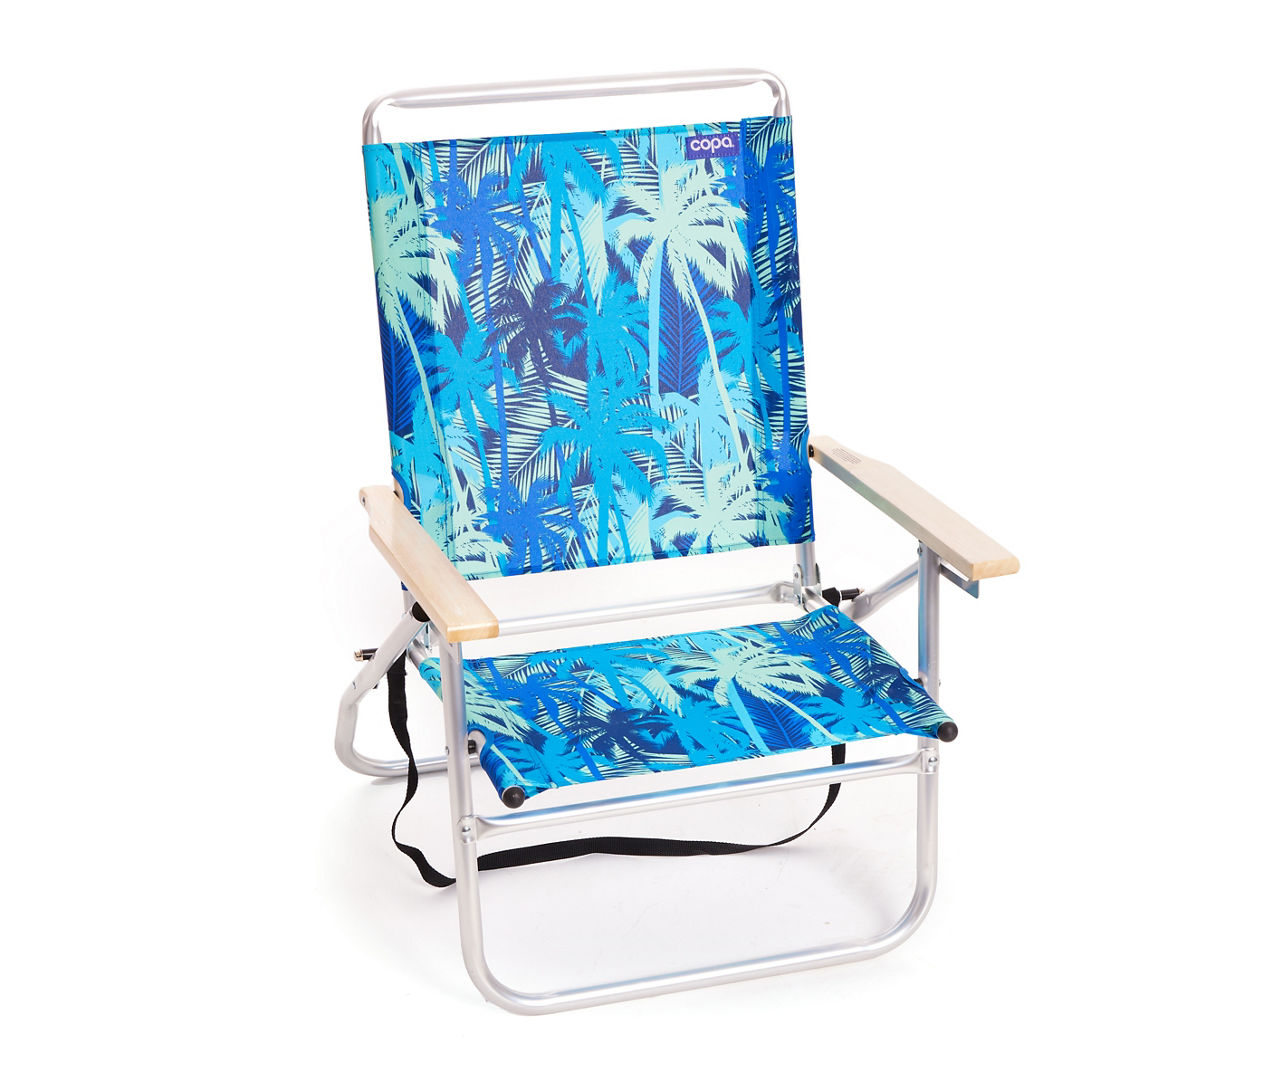 COPA COPA Mid-Height Folding Beach Chair | Big Lots